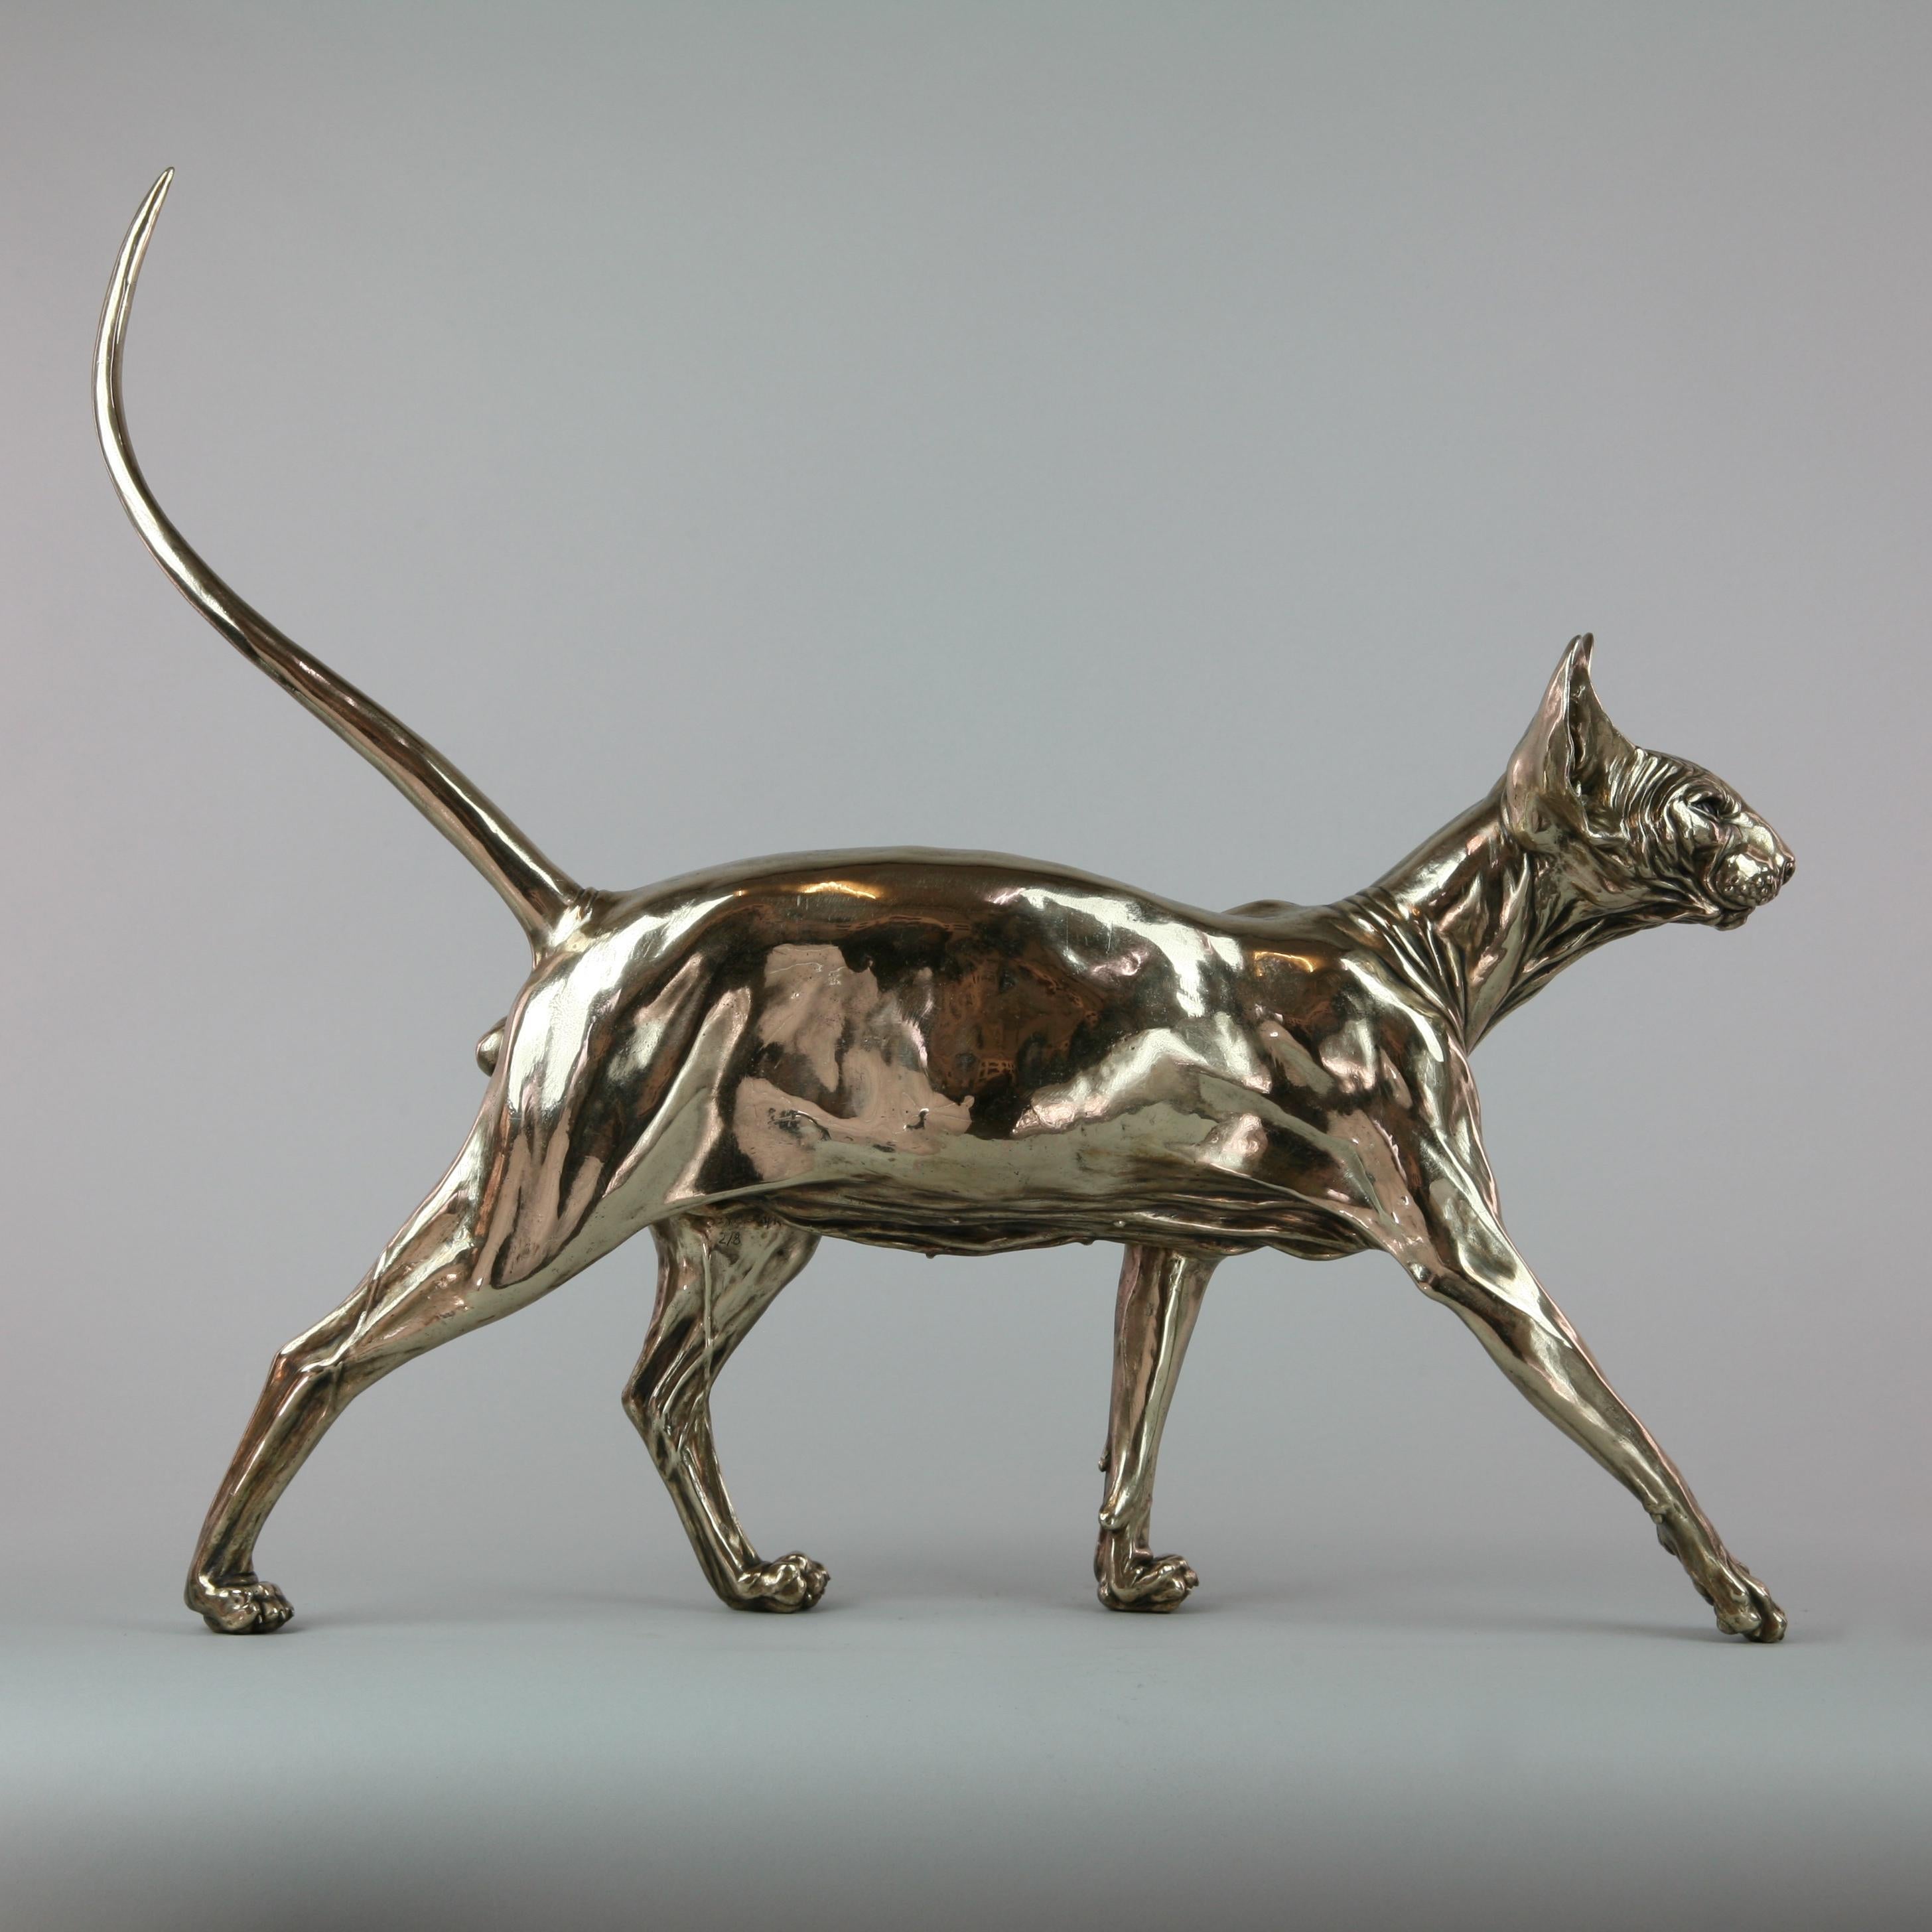 Sphynx Cat II - sculpture wildlife animal limited edition Modern Contemporary